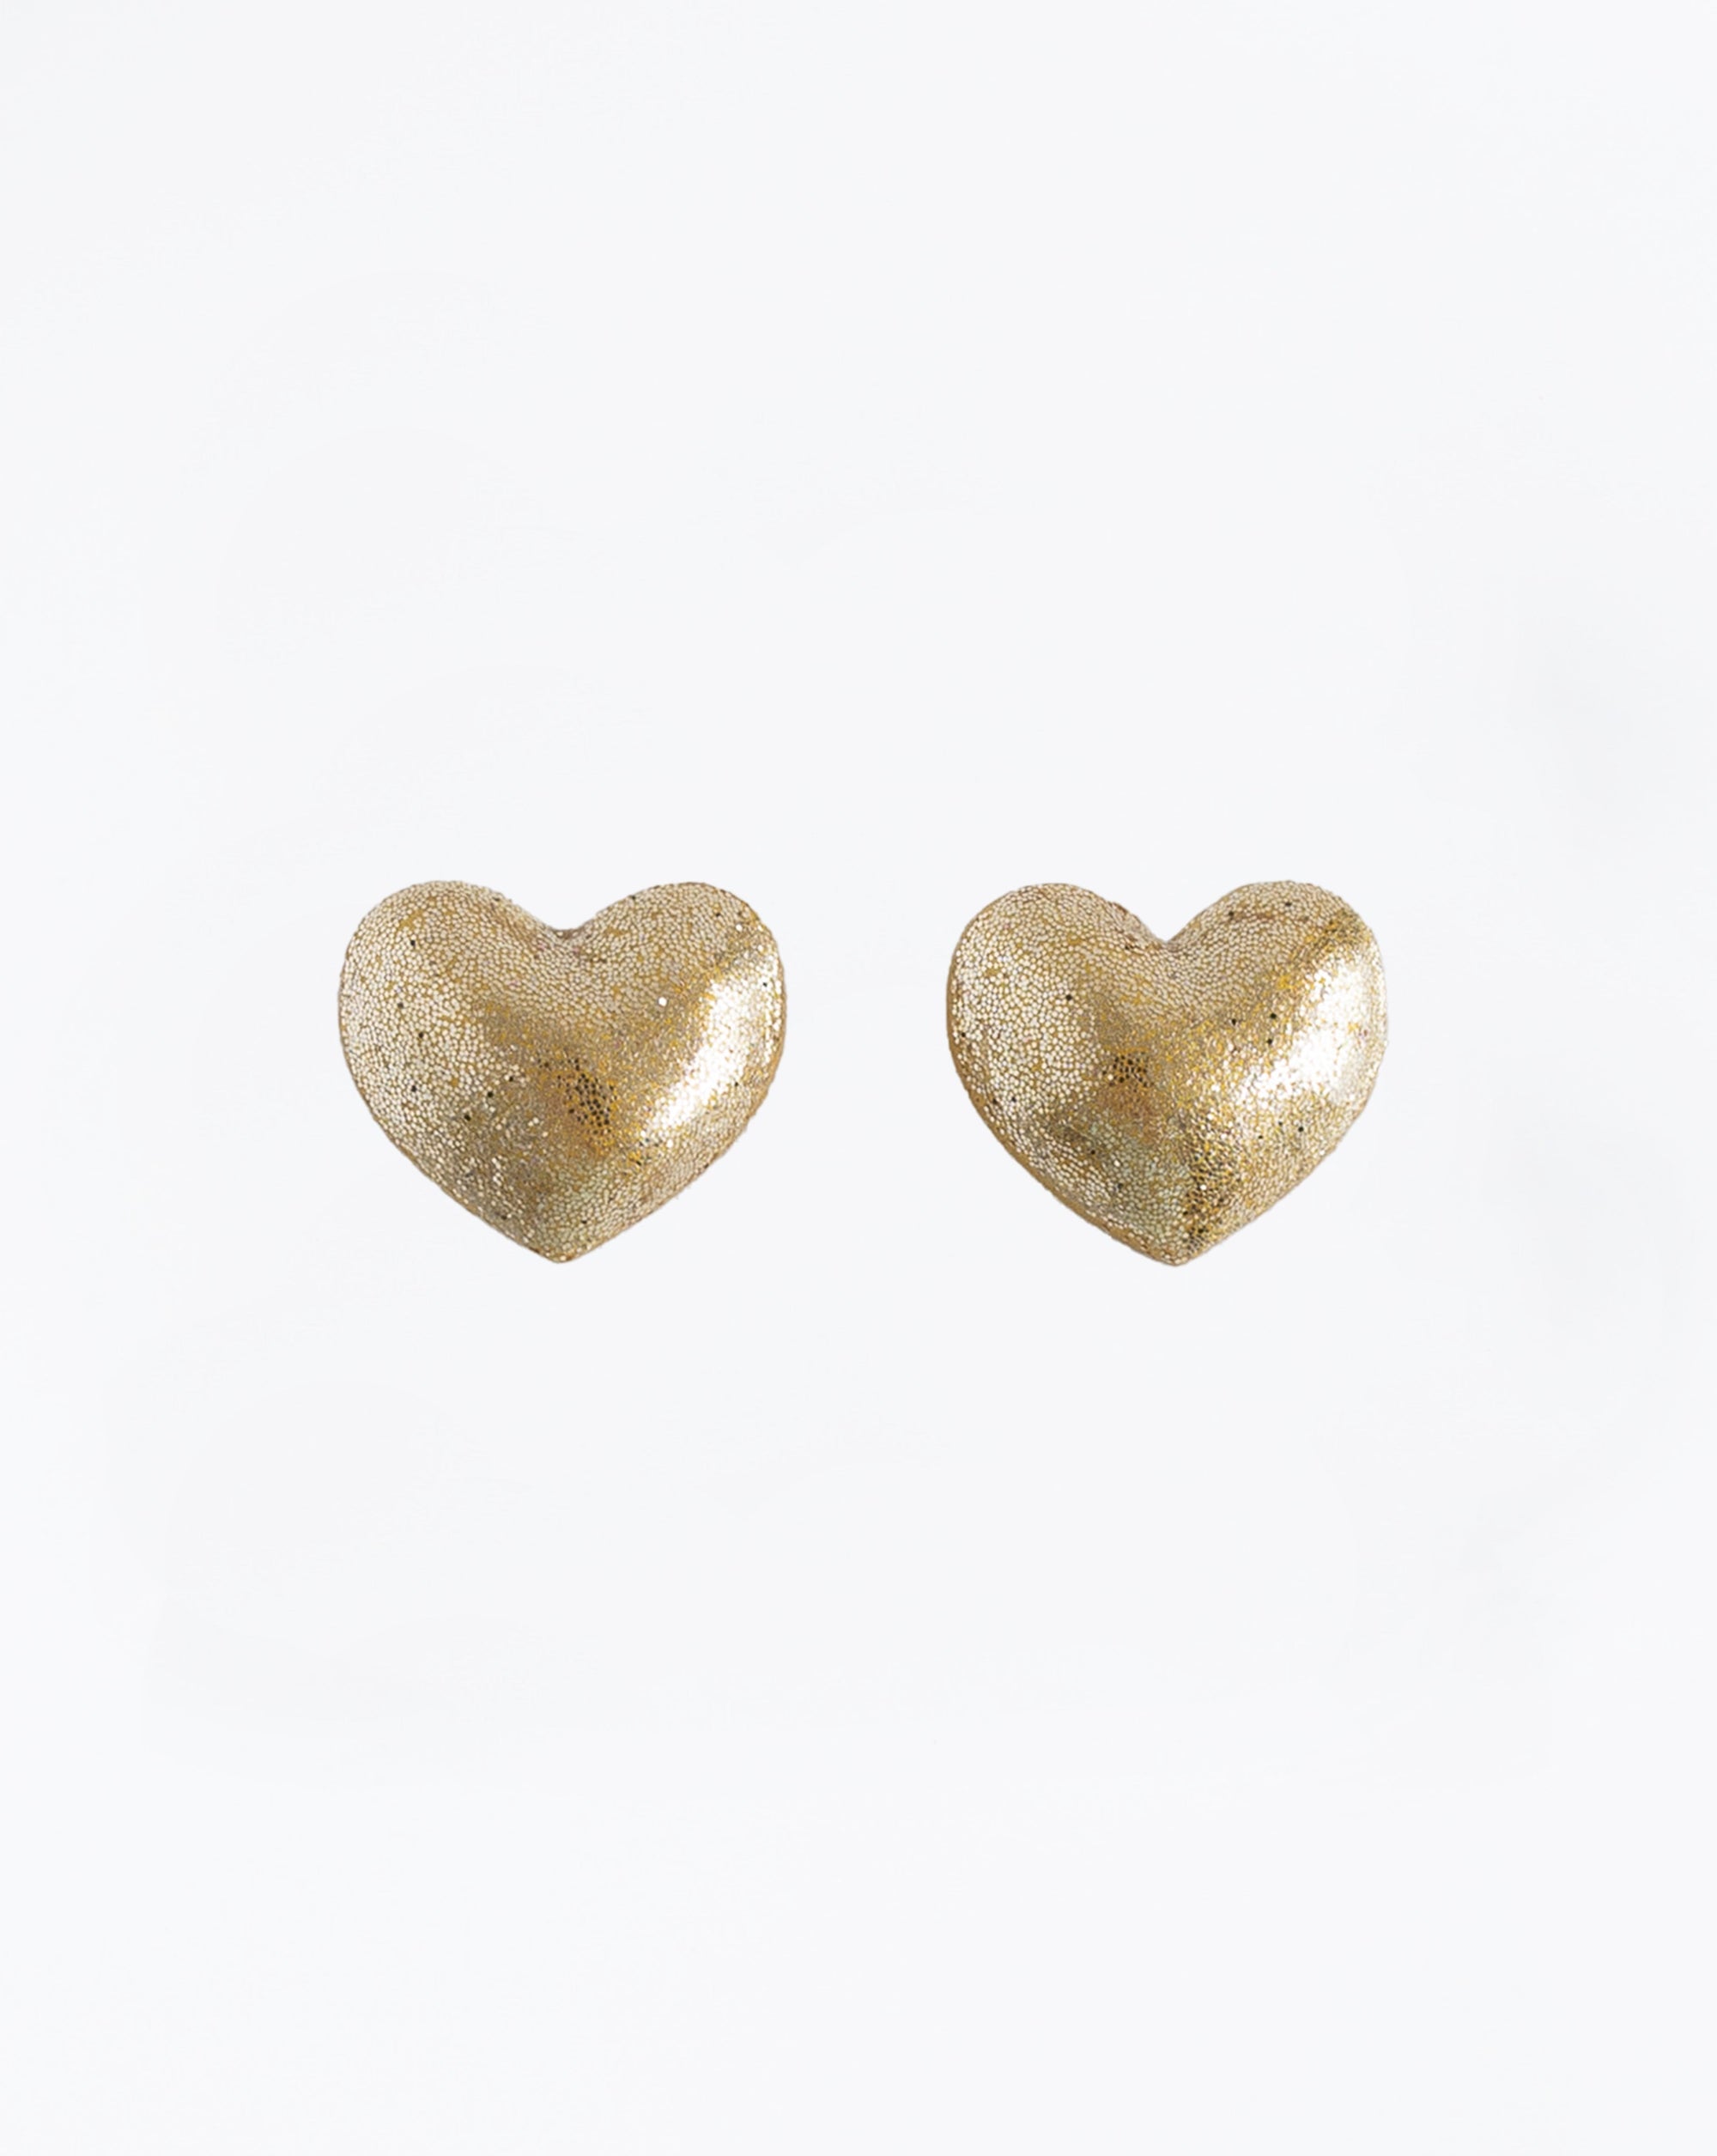 Elegant gold heart stud earrings, light weight, handmade earrings by LYHO.